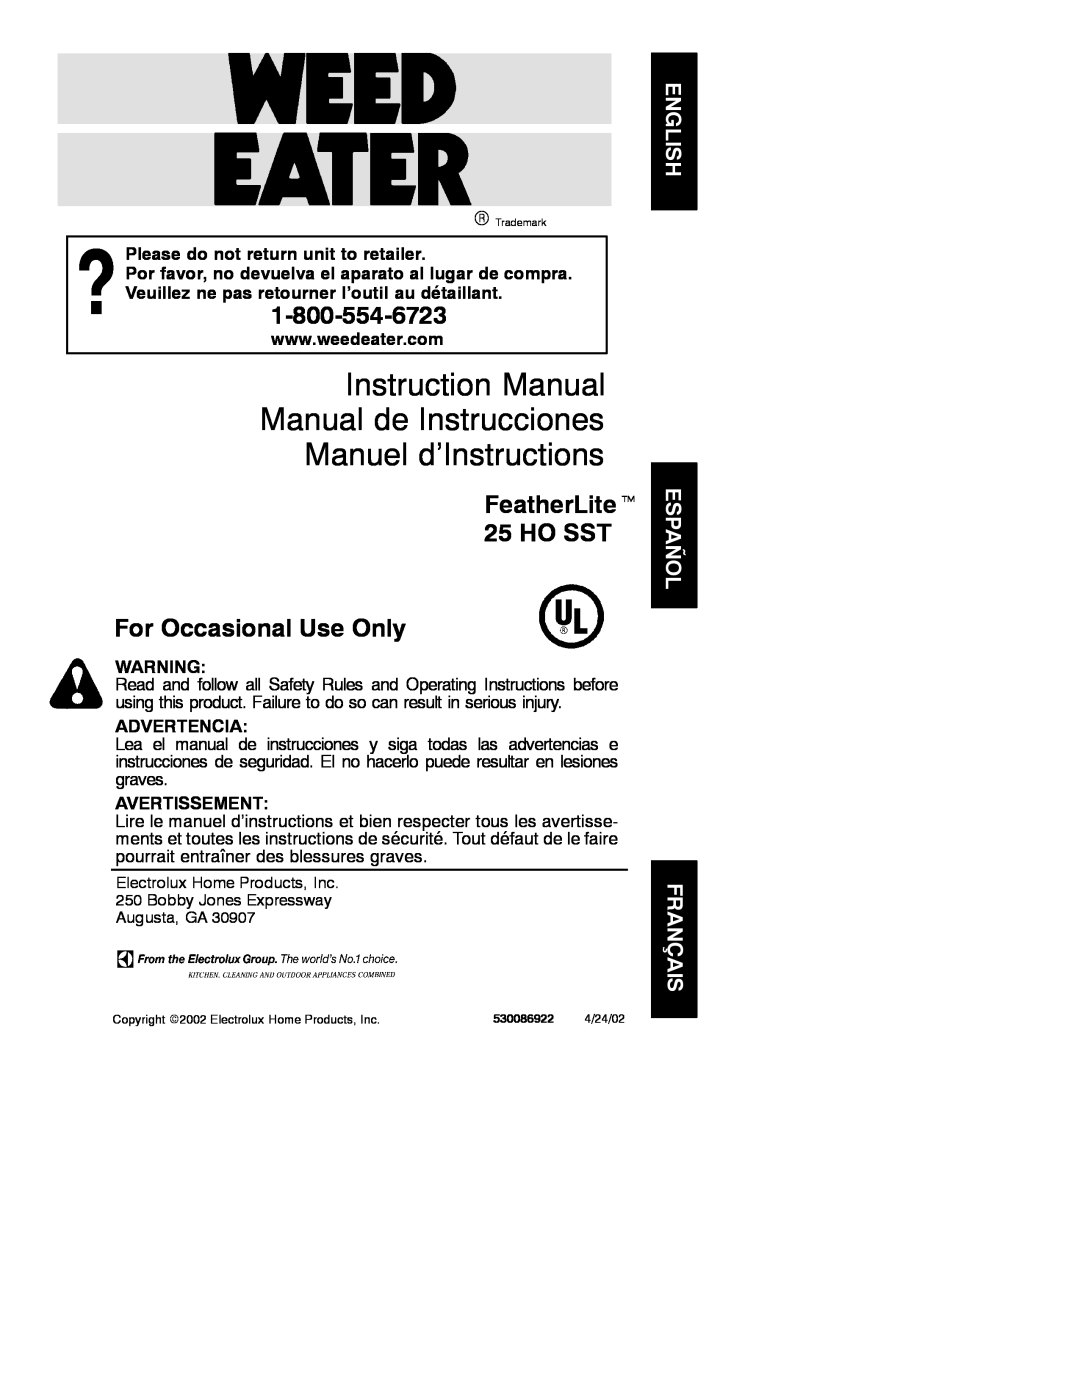 Weed Eater 530086922 instruction manual Please do not return unit to retailer, Advertencia, Avertissement, FeatherLitet 